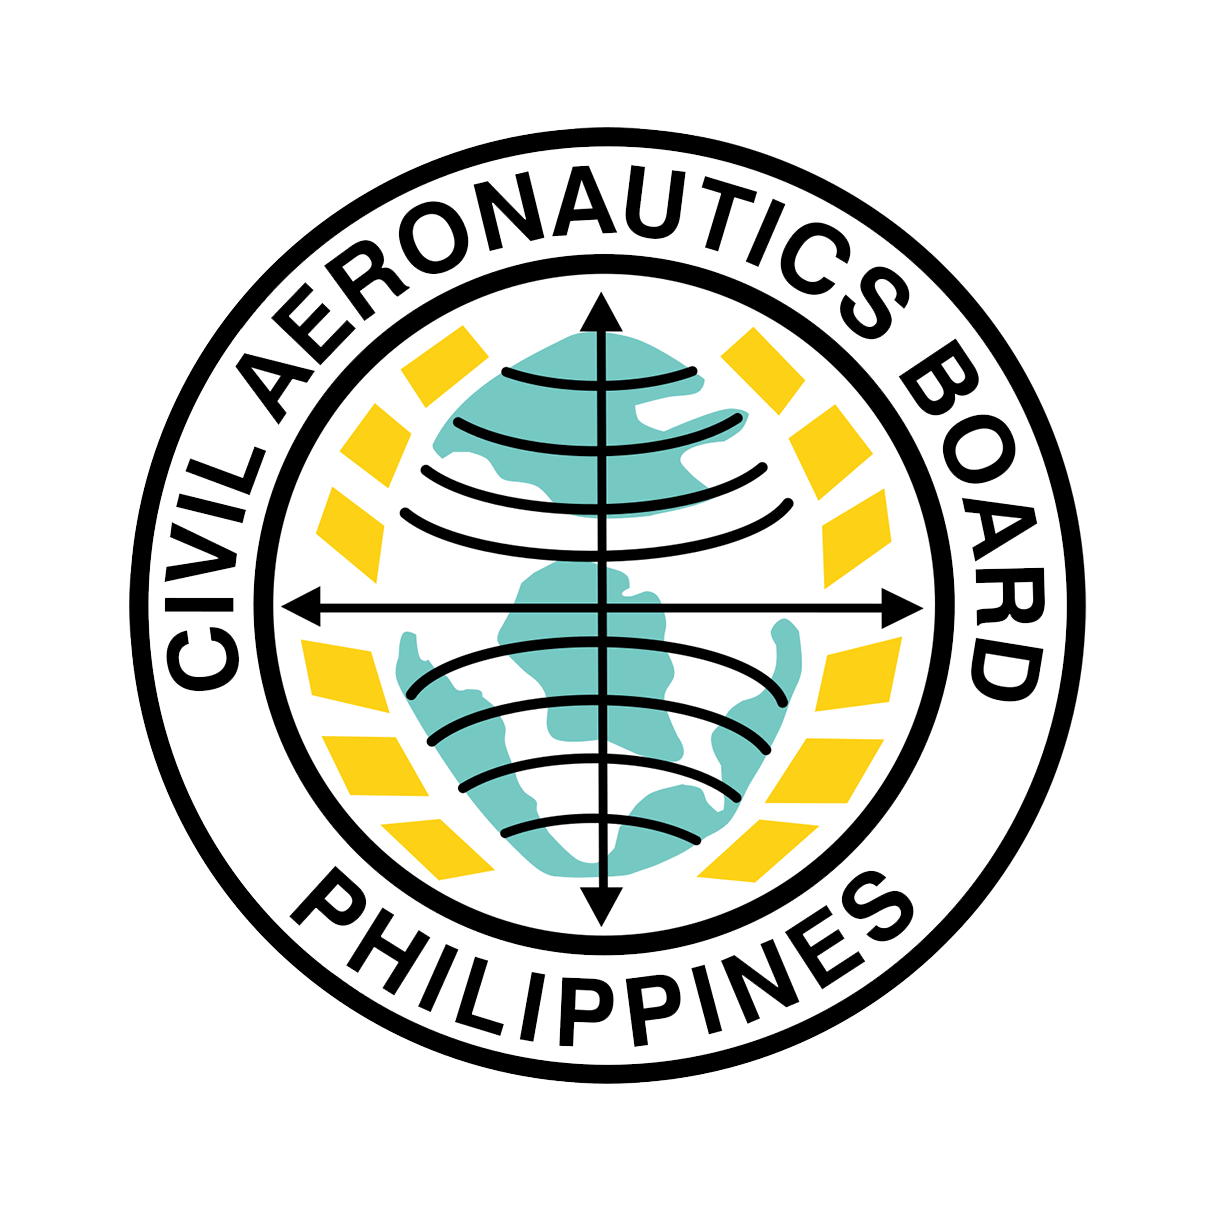 Civil Aeronautics Board